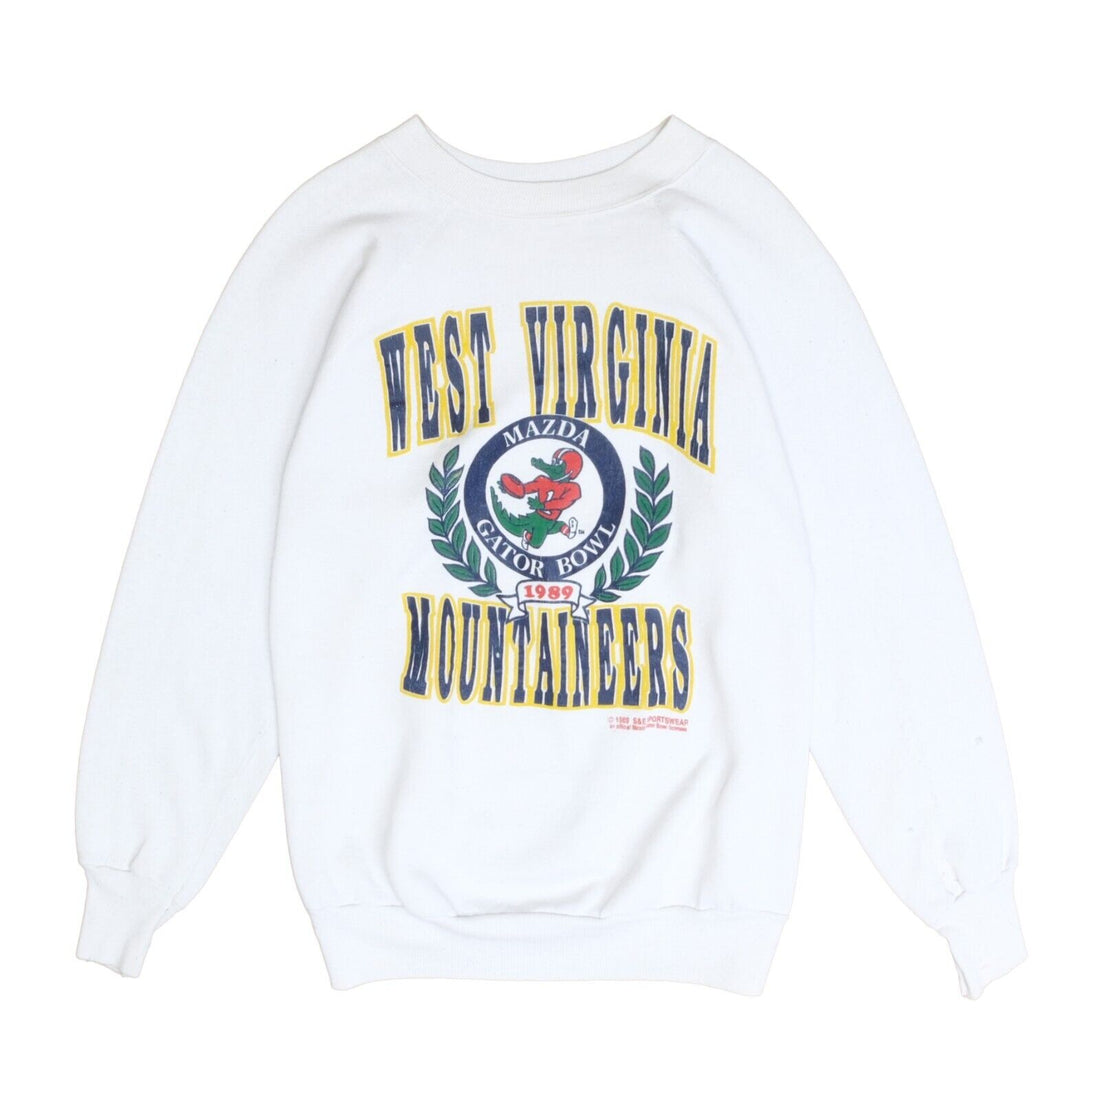 Vintage West Virginia Mountaineers Gator Bowl Sweatshirt Large 1989 80s NCAA